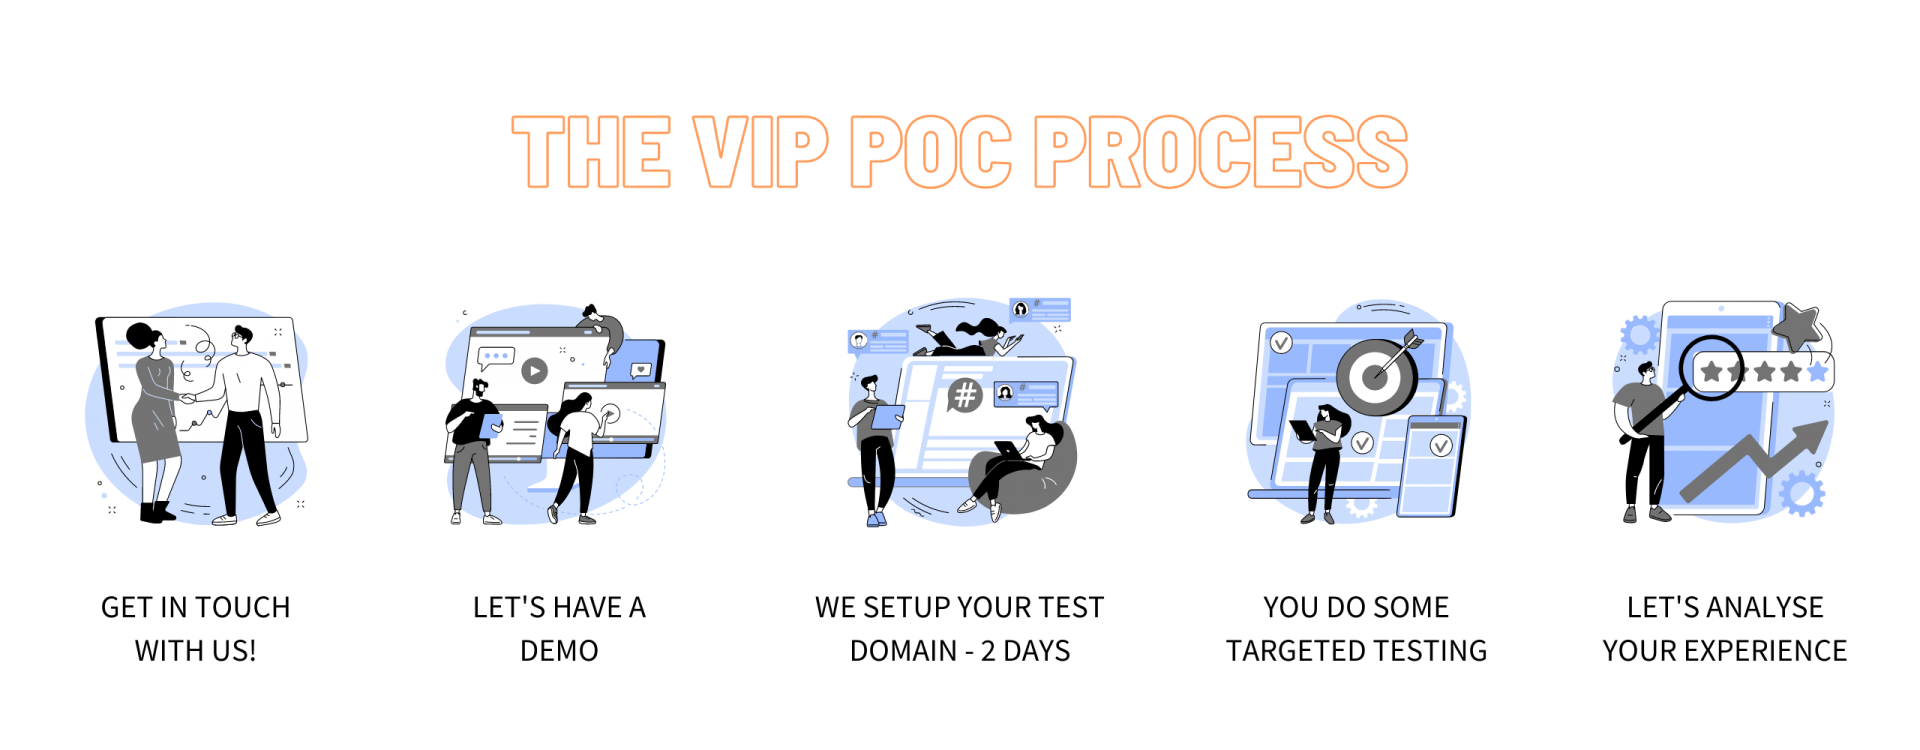 poc process video in person solution